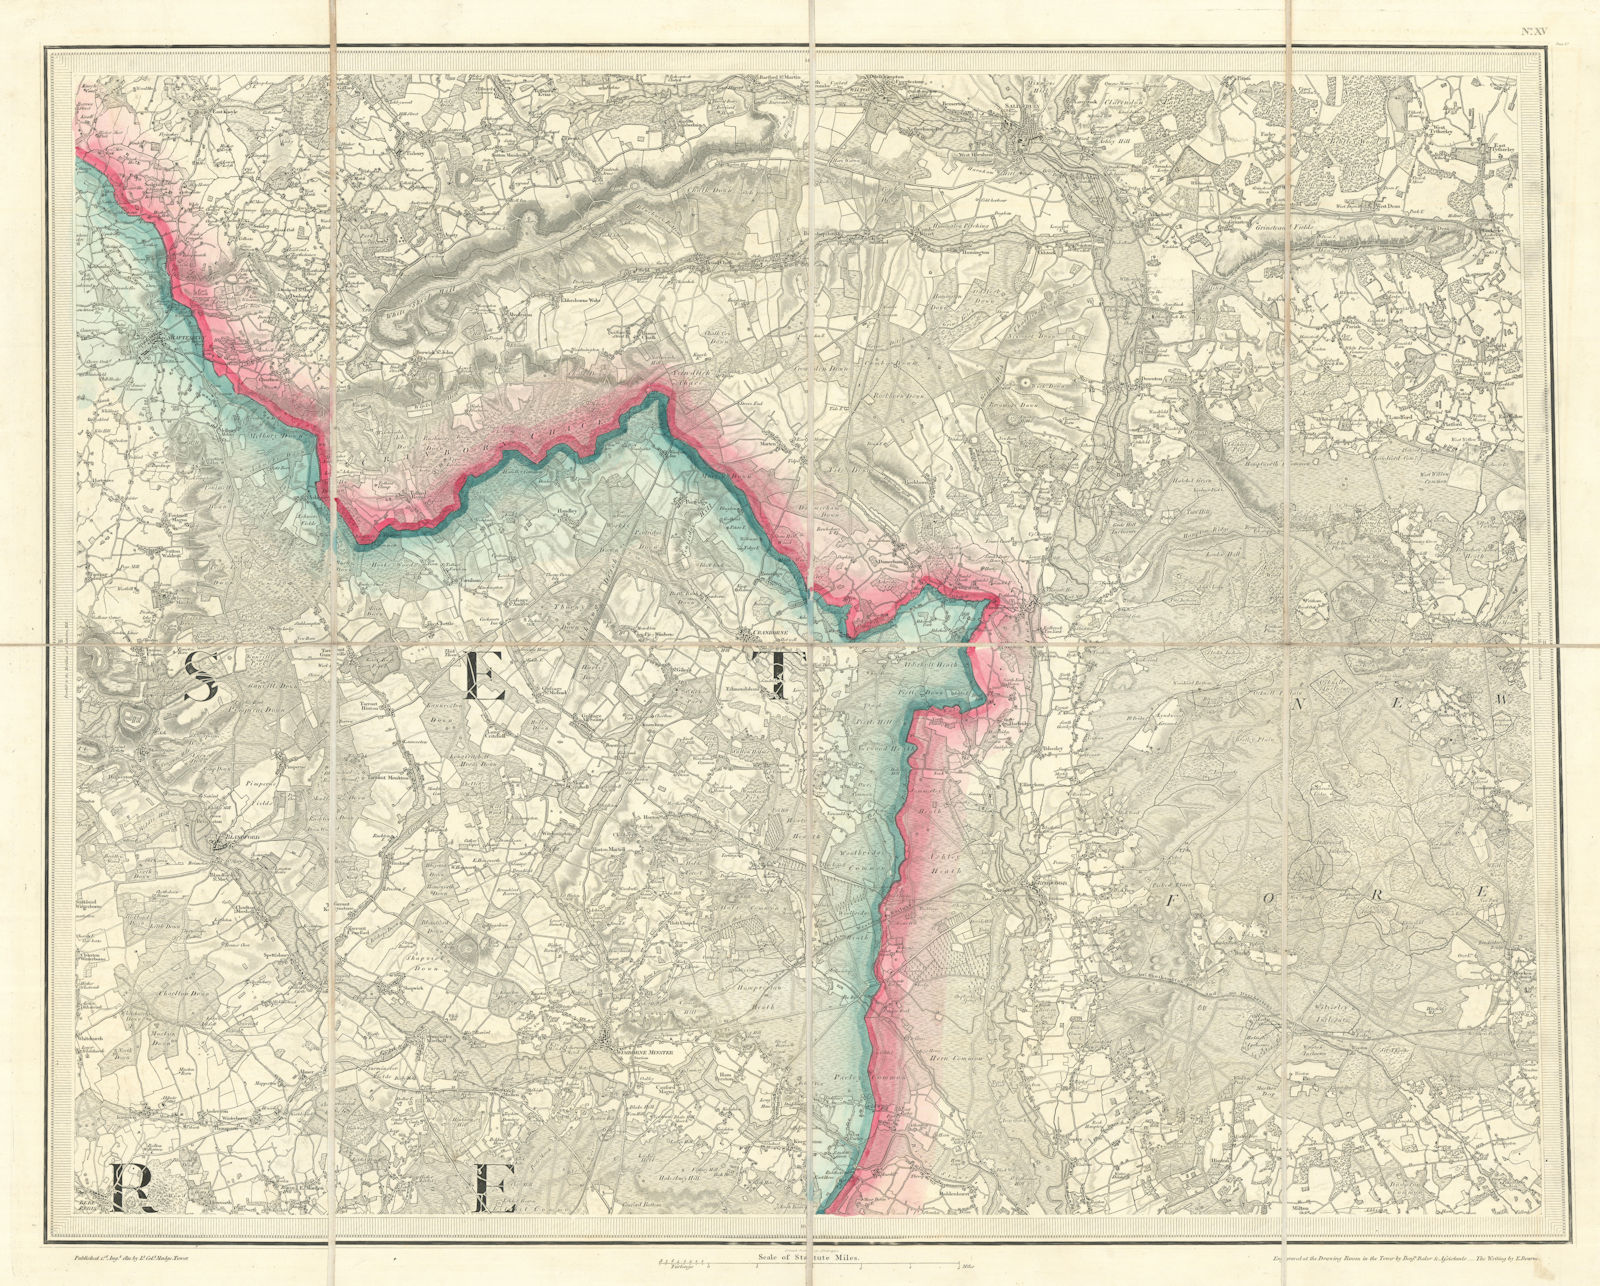 OS #15 New Forest & Dorset Downs & Heaths. Salisbury Ringwood Hampshire 1811 map